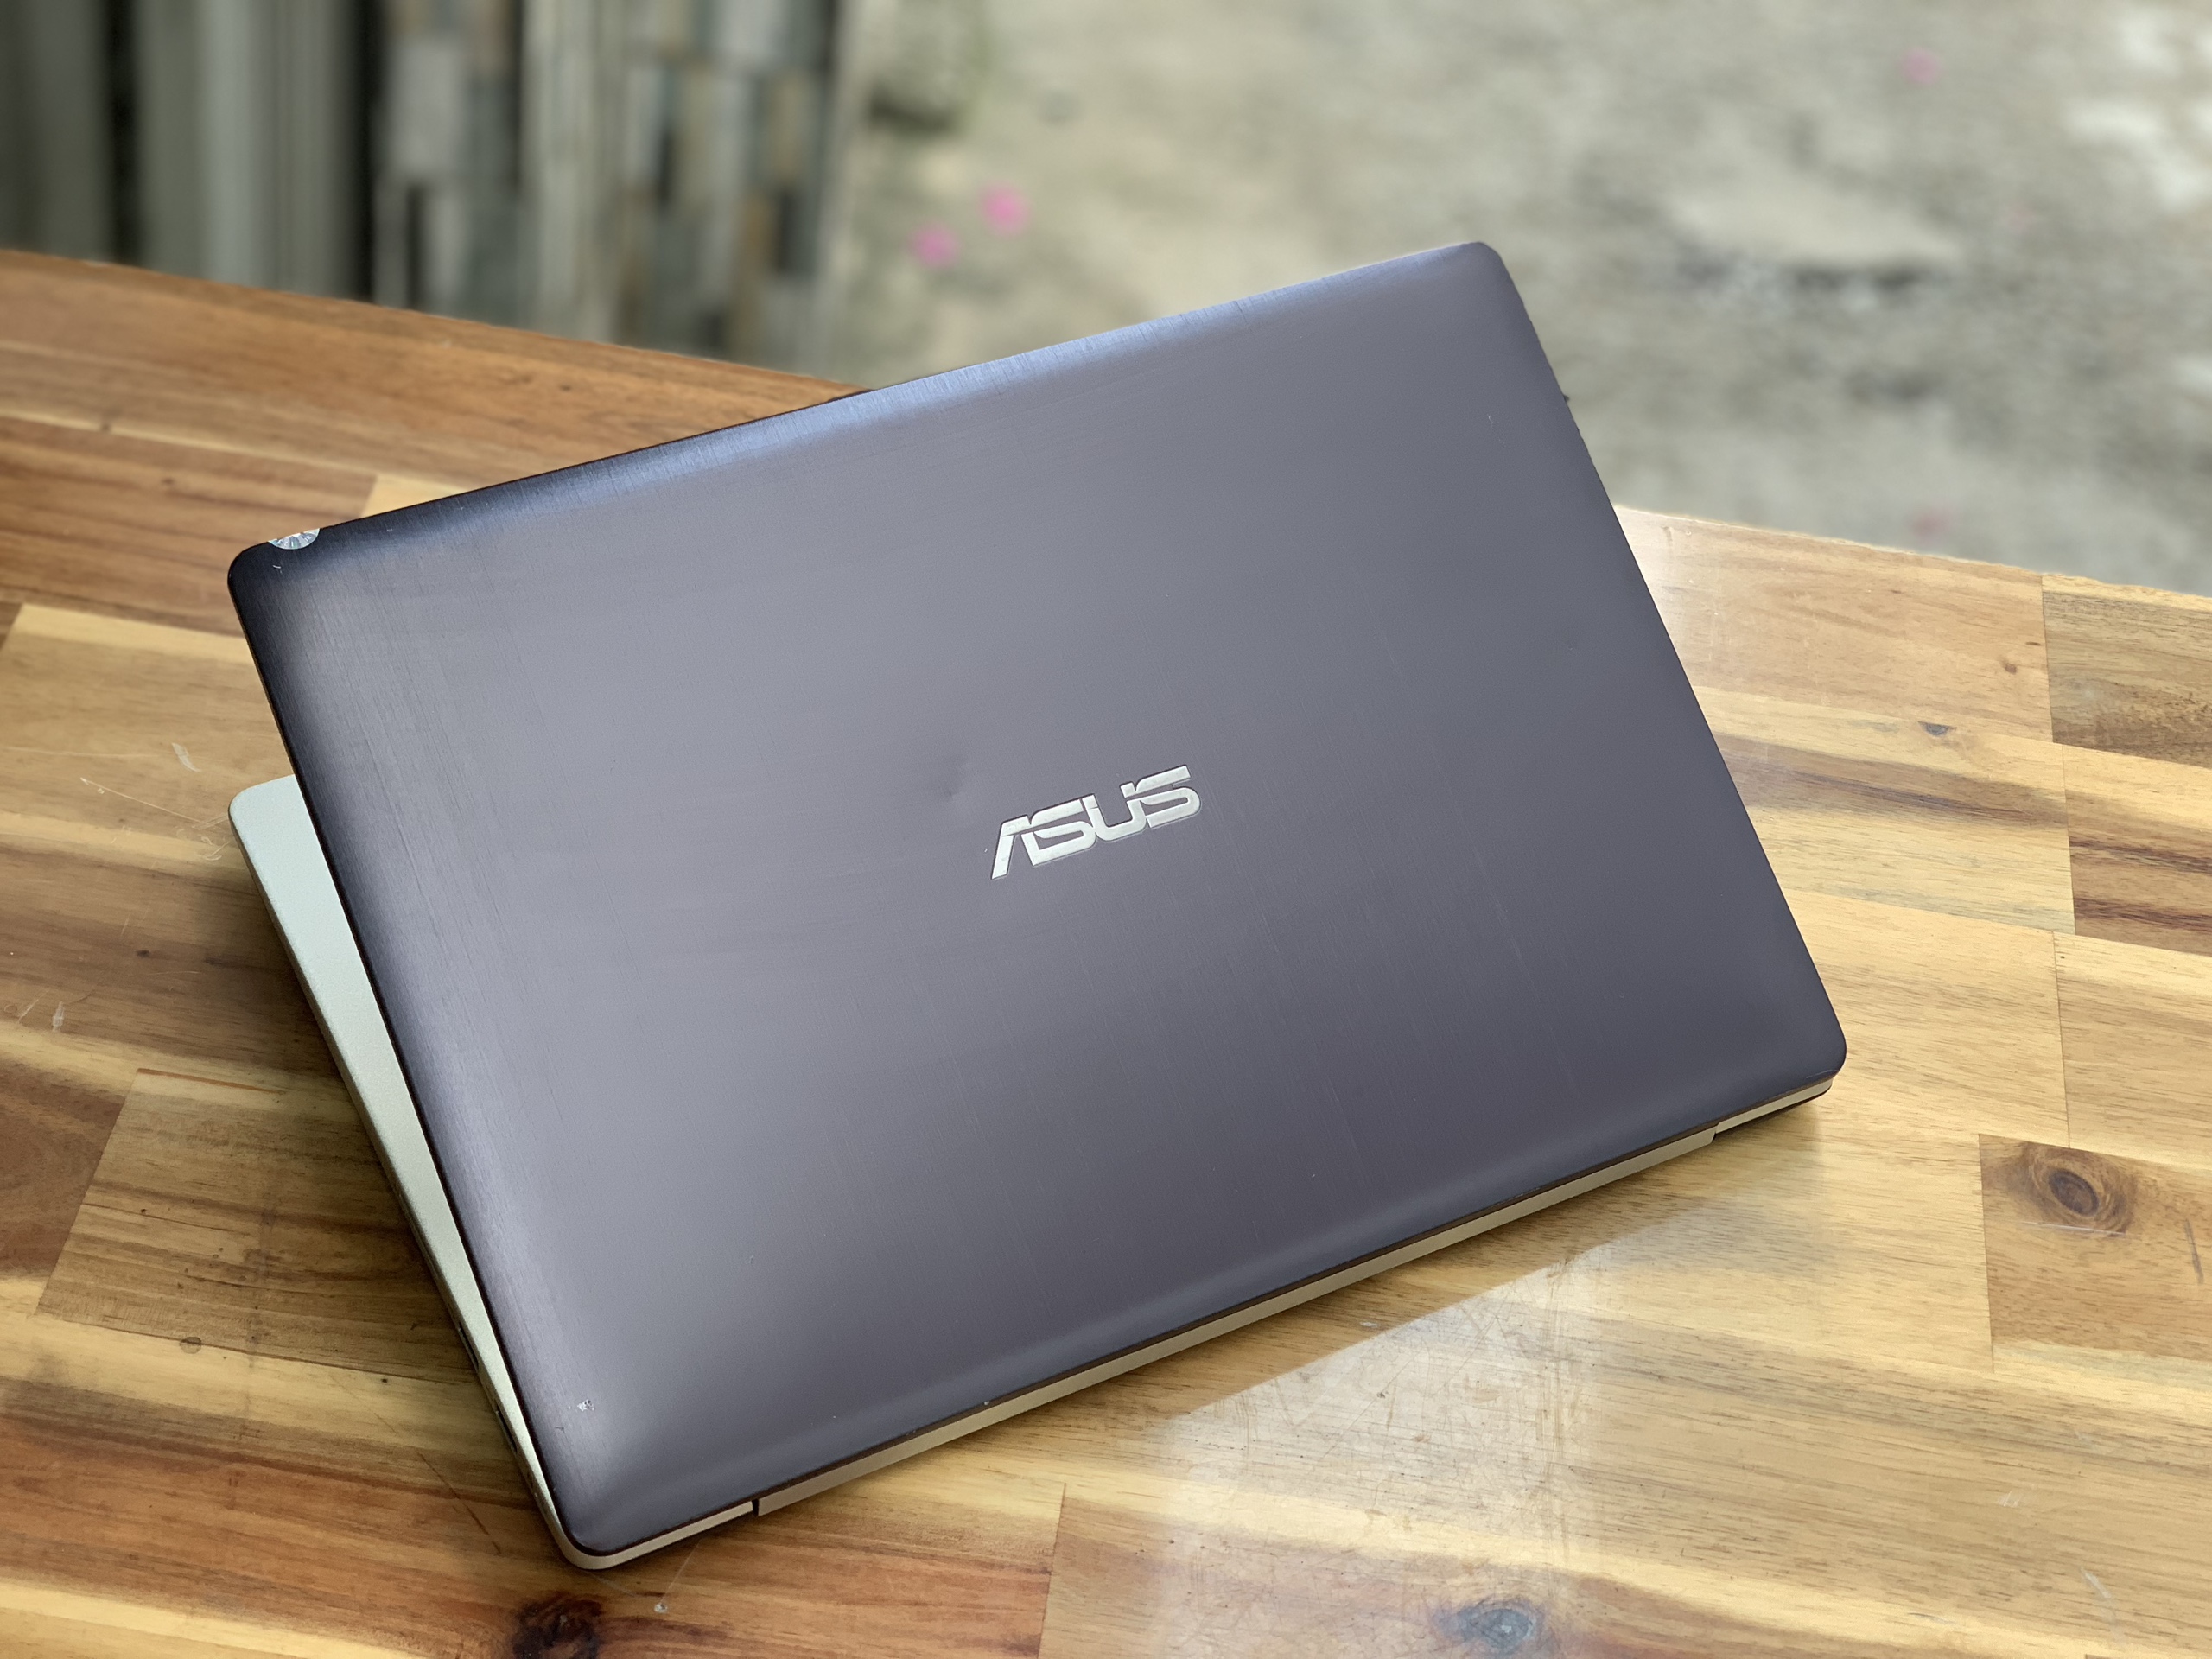 Laptop Asus Vivobook S301LA, i5 4200U 4G SS128 Cảm ứng 13in đẹp zin 100% Giá rẻ